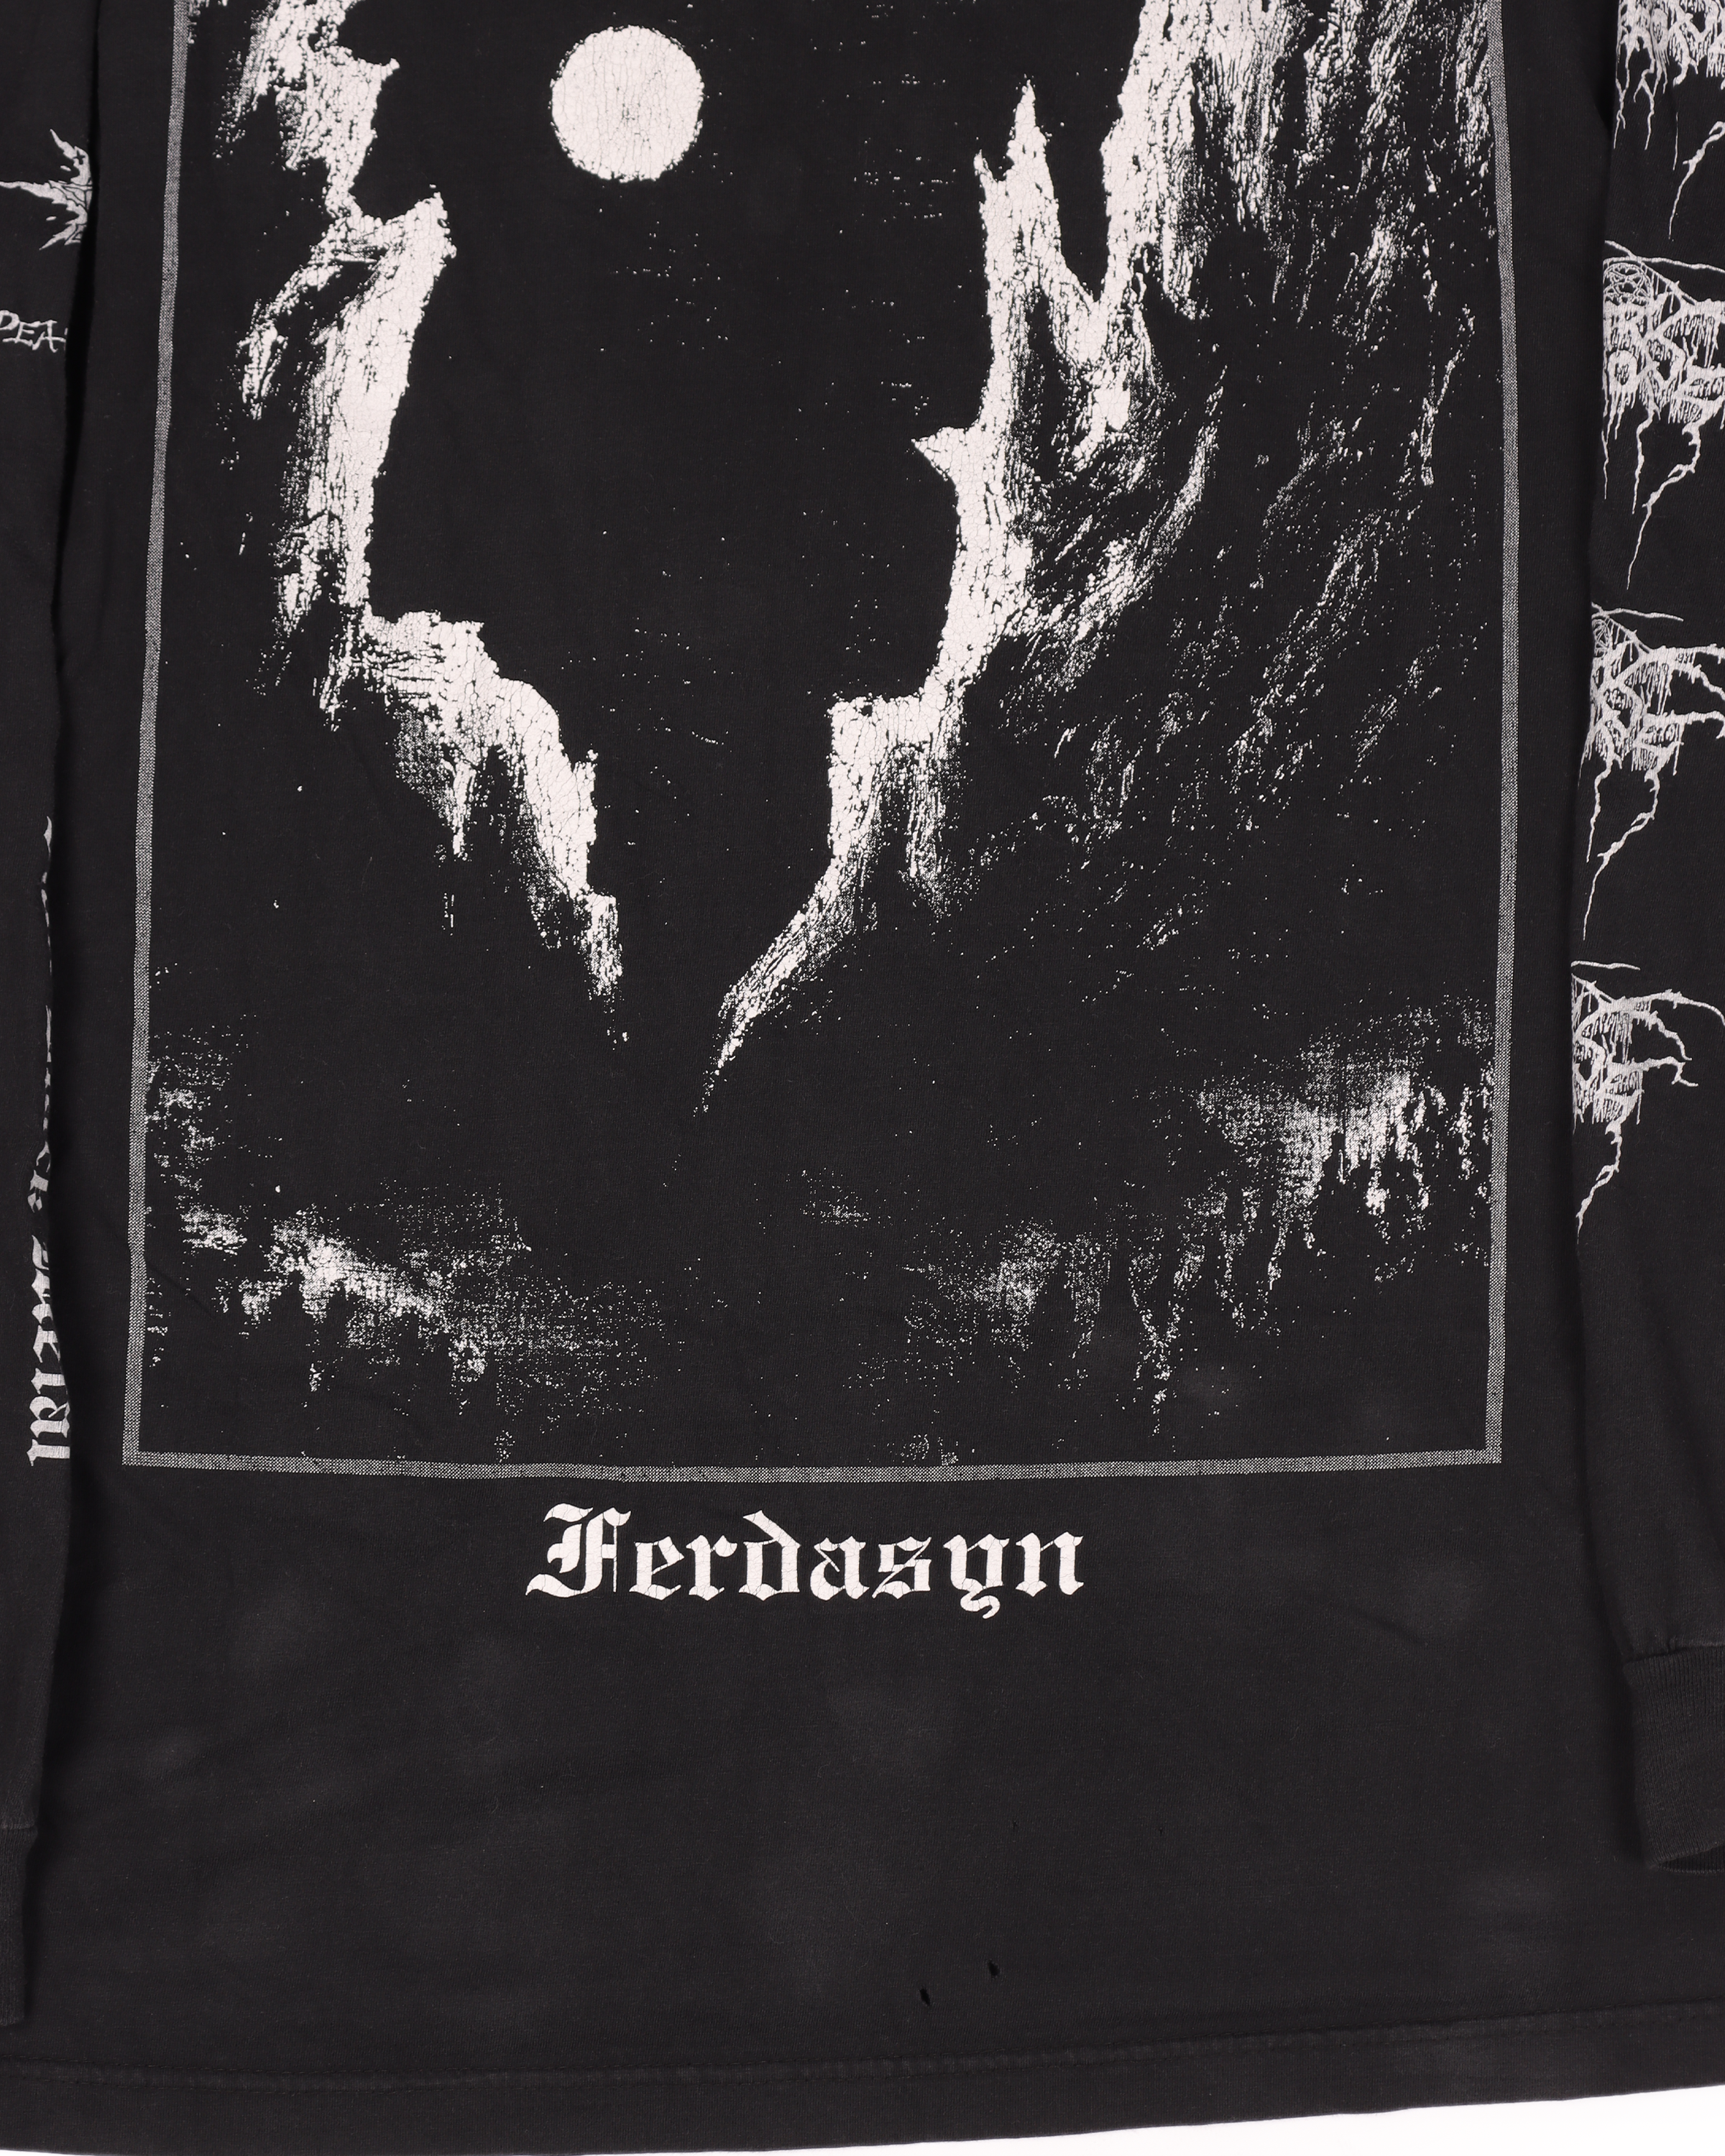 1999 Darkthrone Transilvanian Hunger Long-sleeve T-Shirt